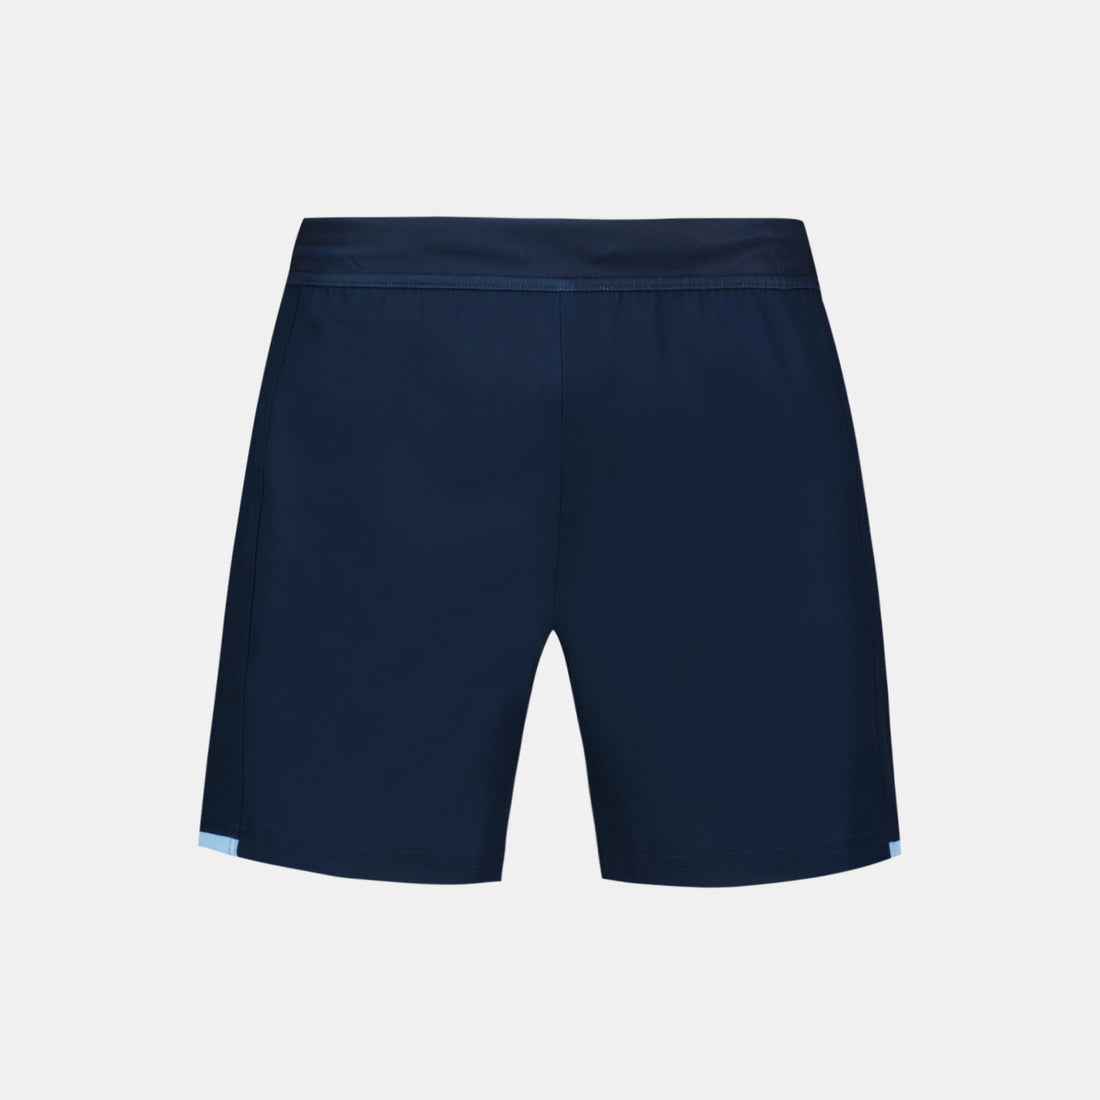 2320302-AB PRO Short M blue navy  | Pantalones Cortos Hombre